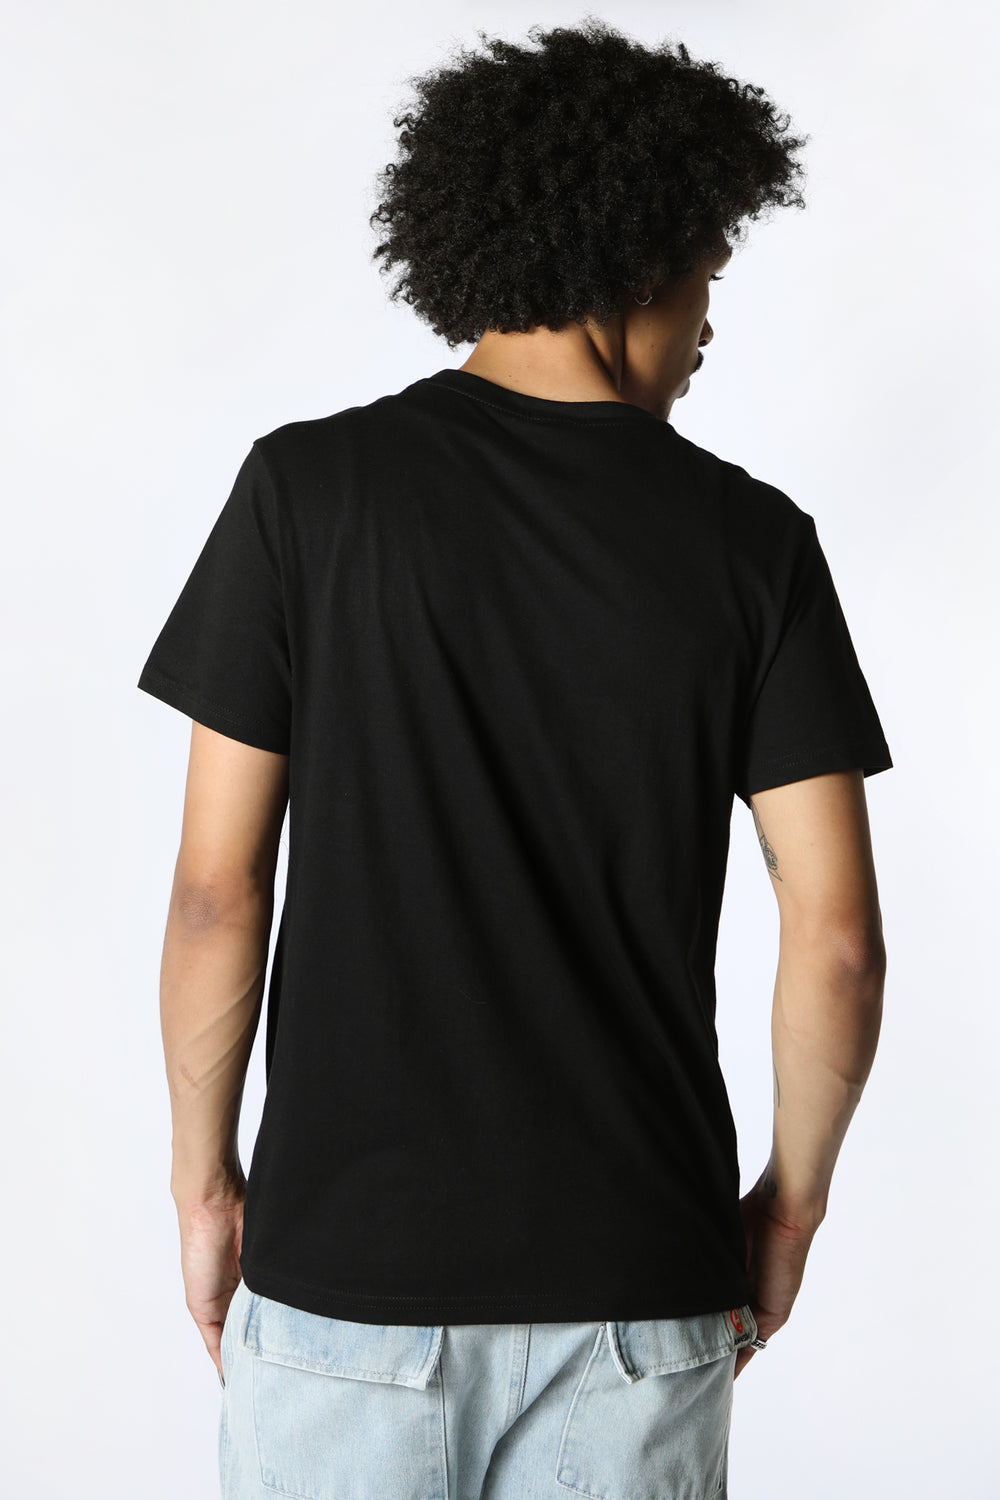 West49 Mens Drift King T-Shirt Black